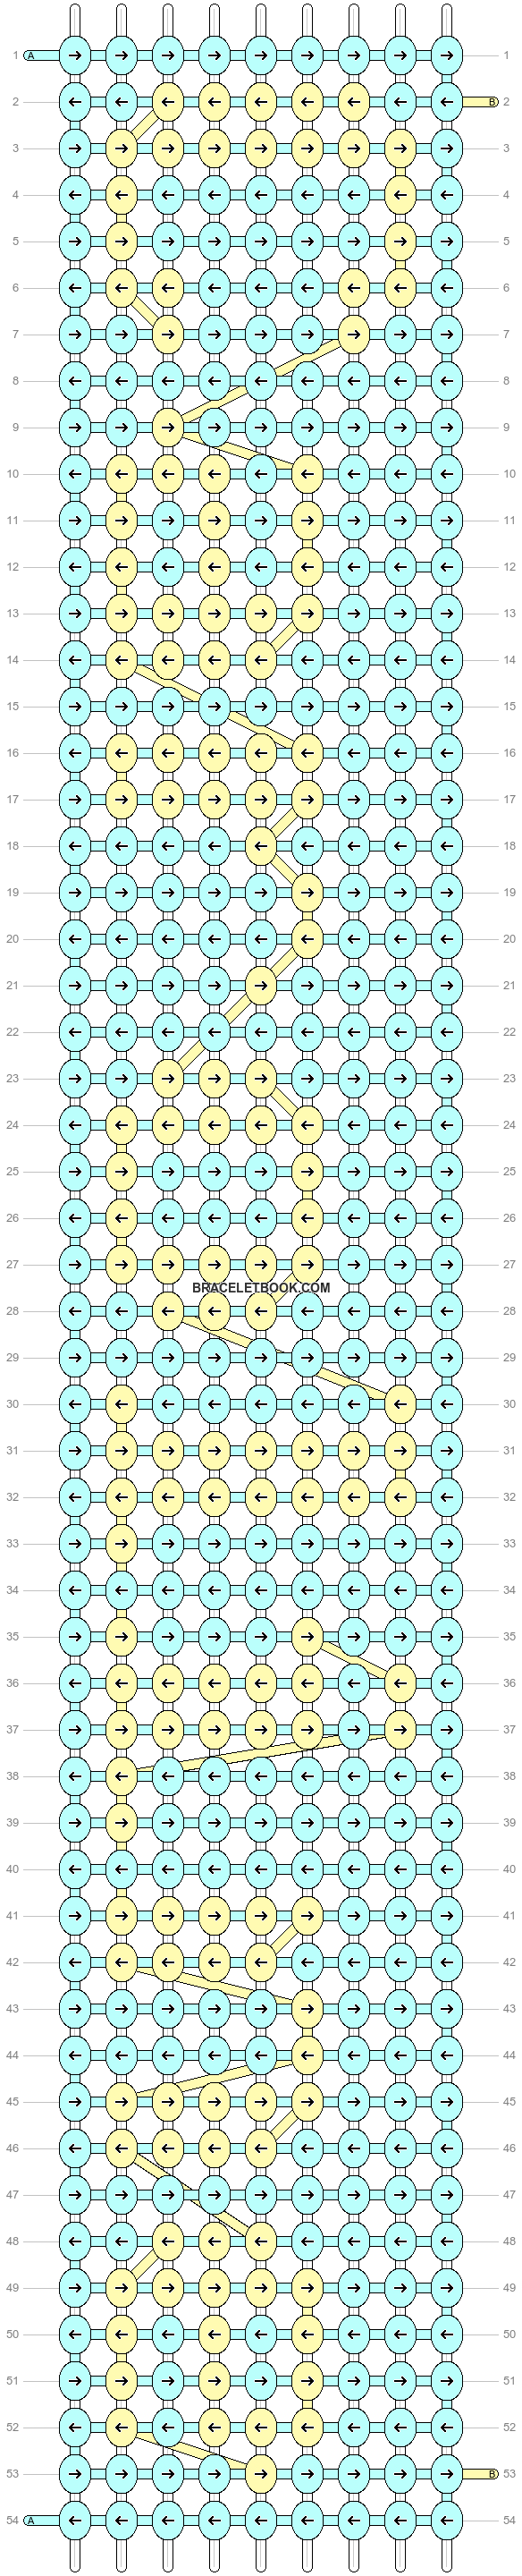 Alpha pattern #6543 variation #90920 pattern